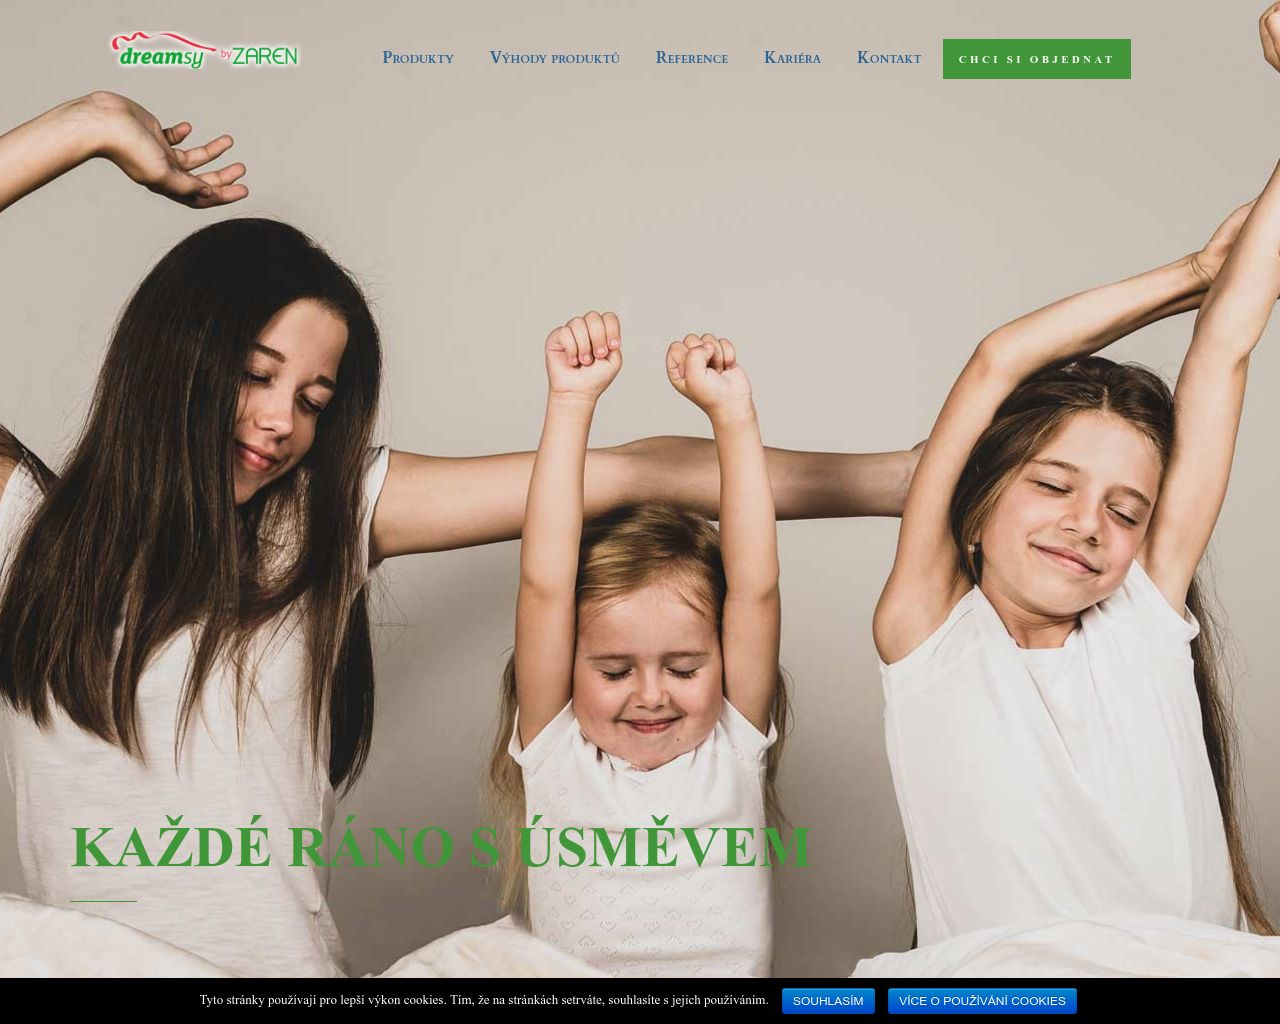 Site Image zaren.cz v 1280x1024